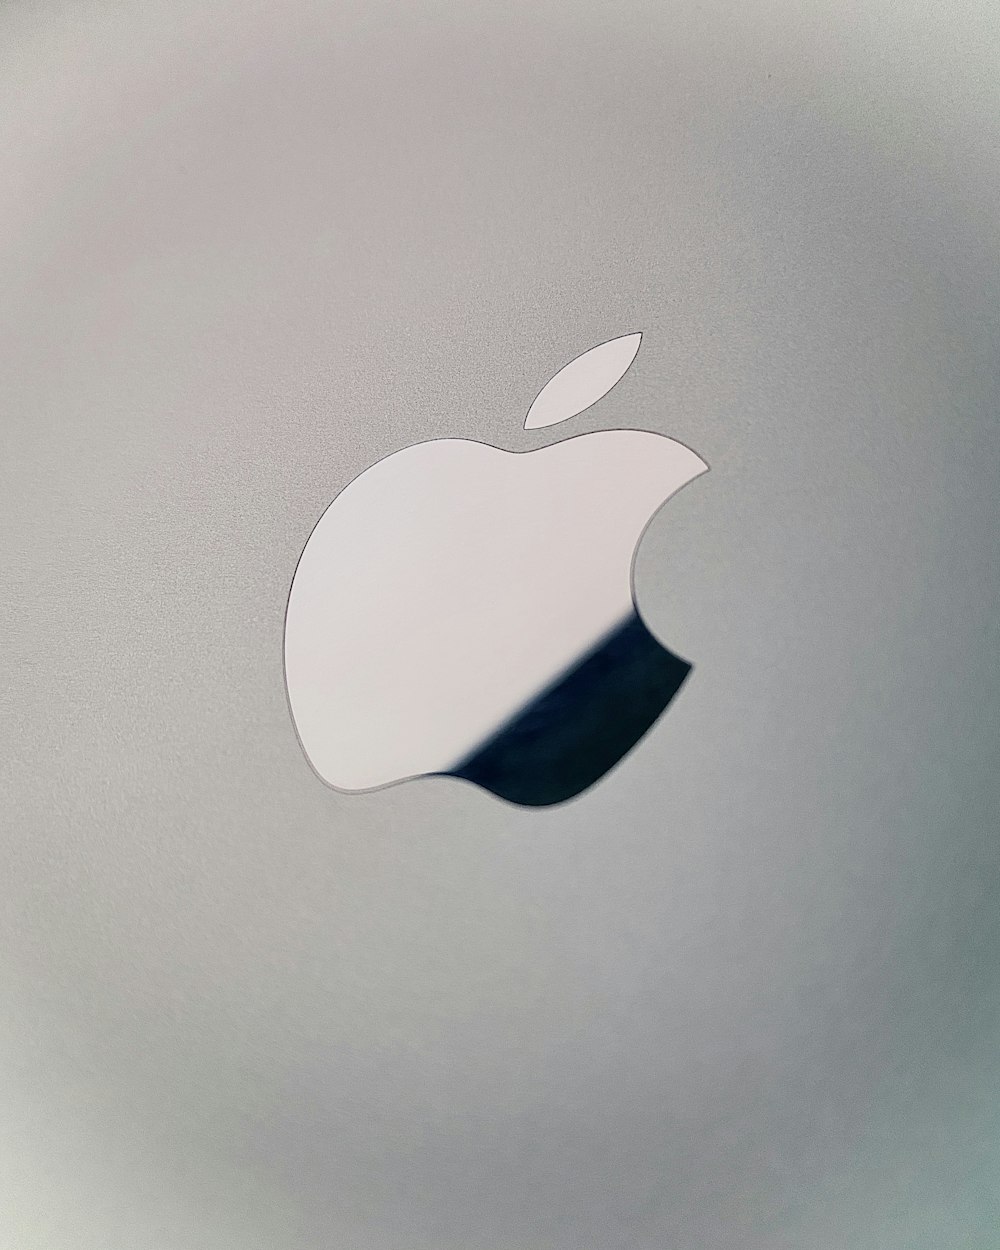 500 Apple Logo Pictures Hd Download Free Images On Unsplash